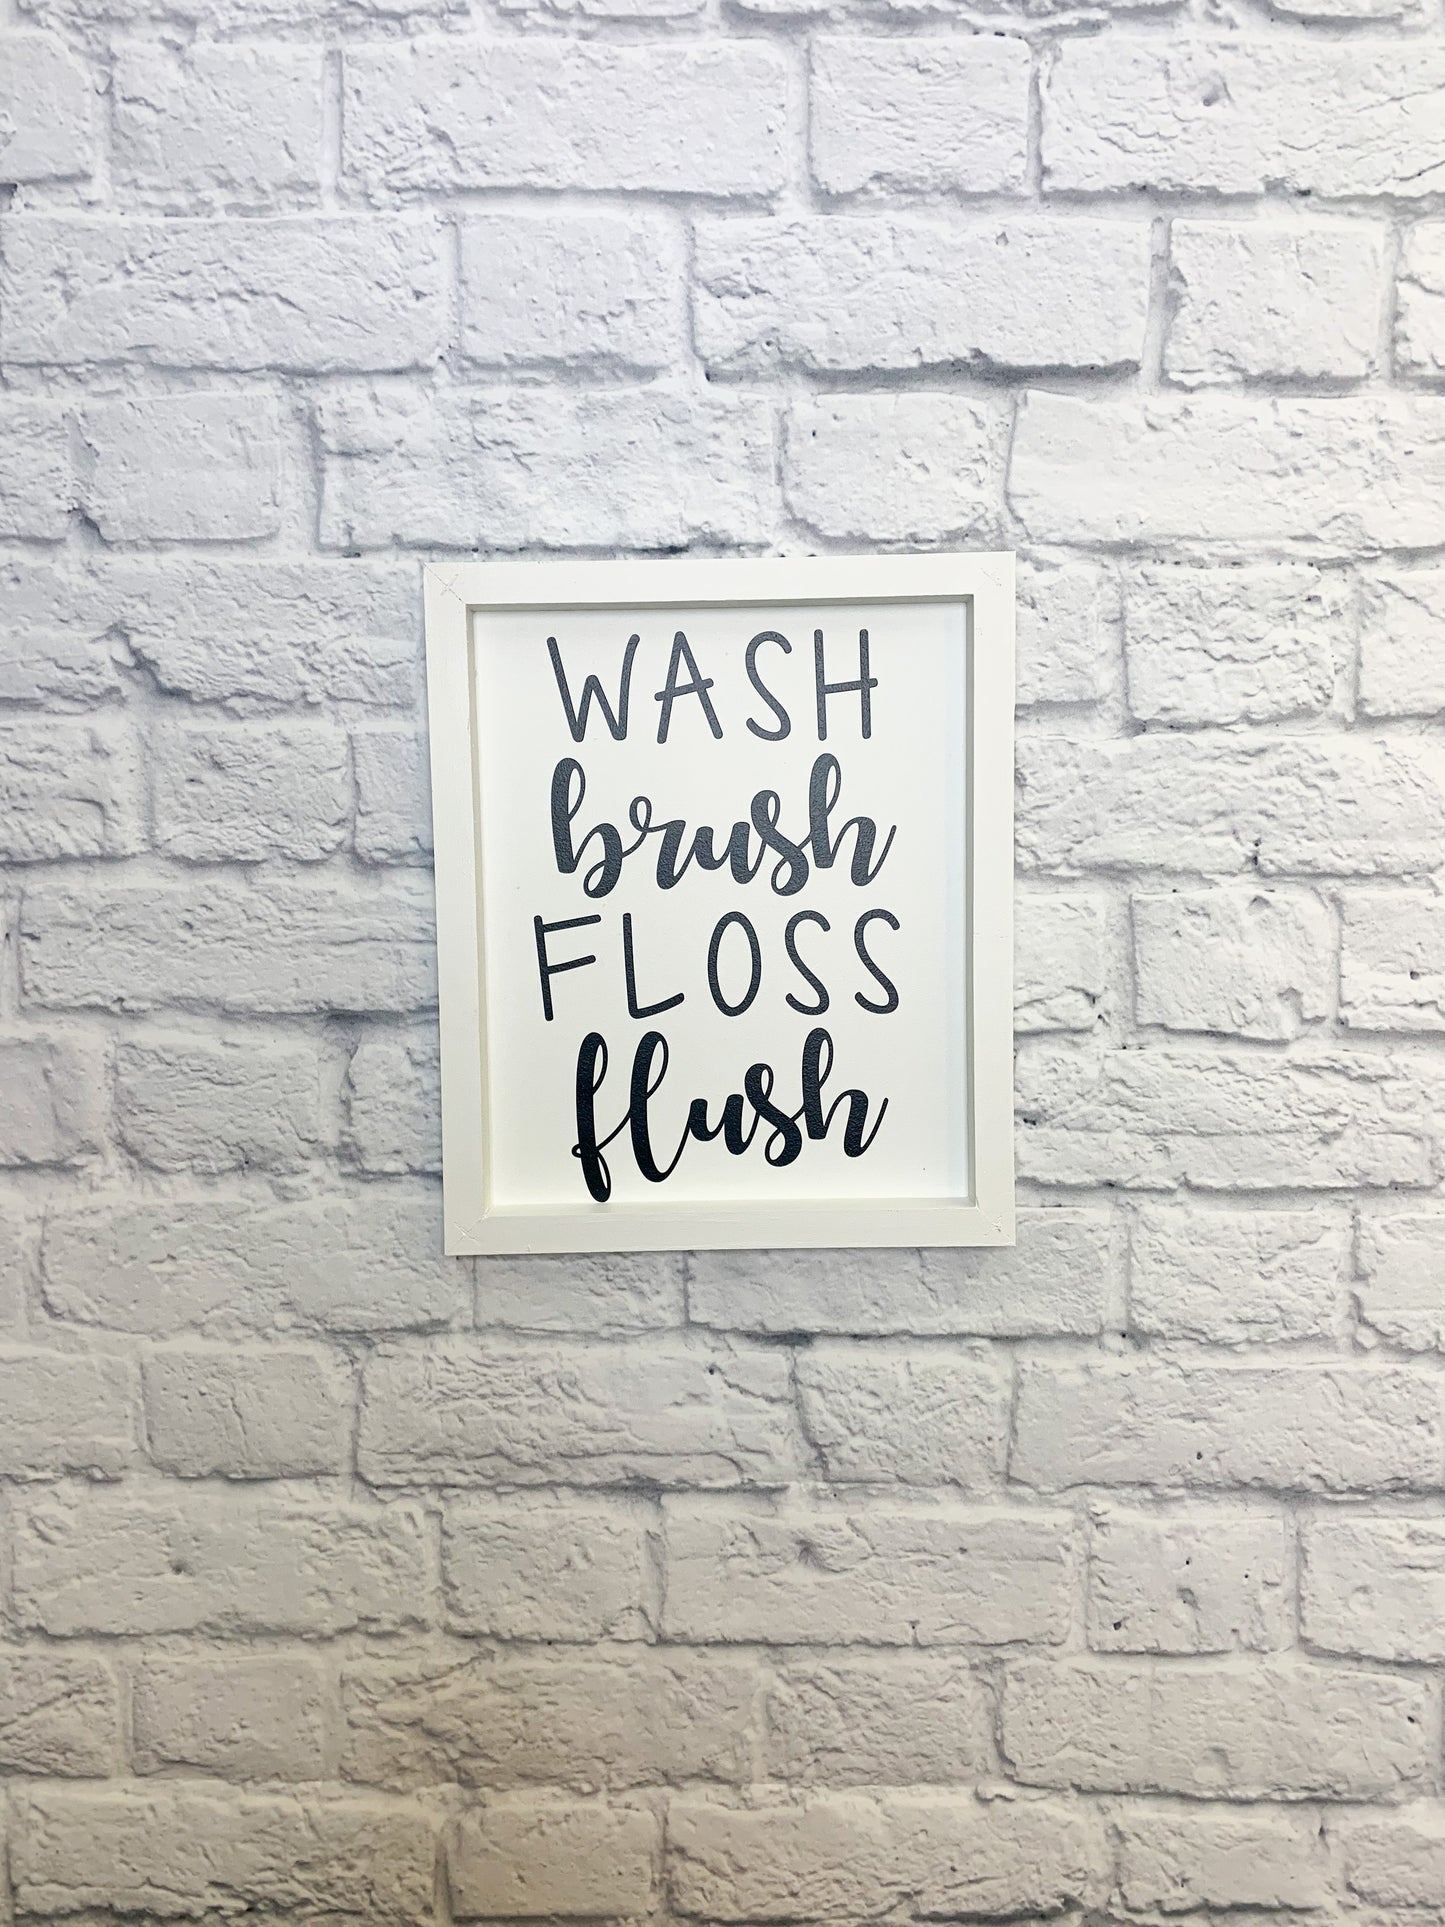 Wash, brush, floss flush